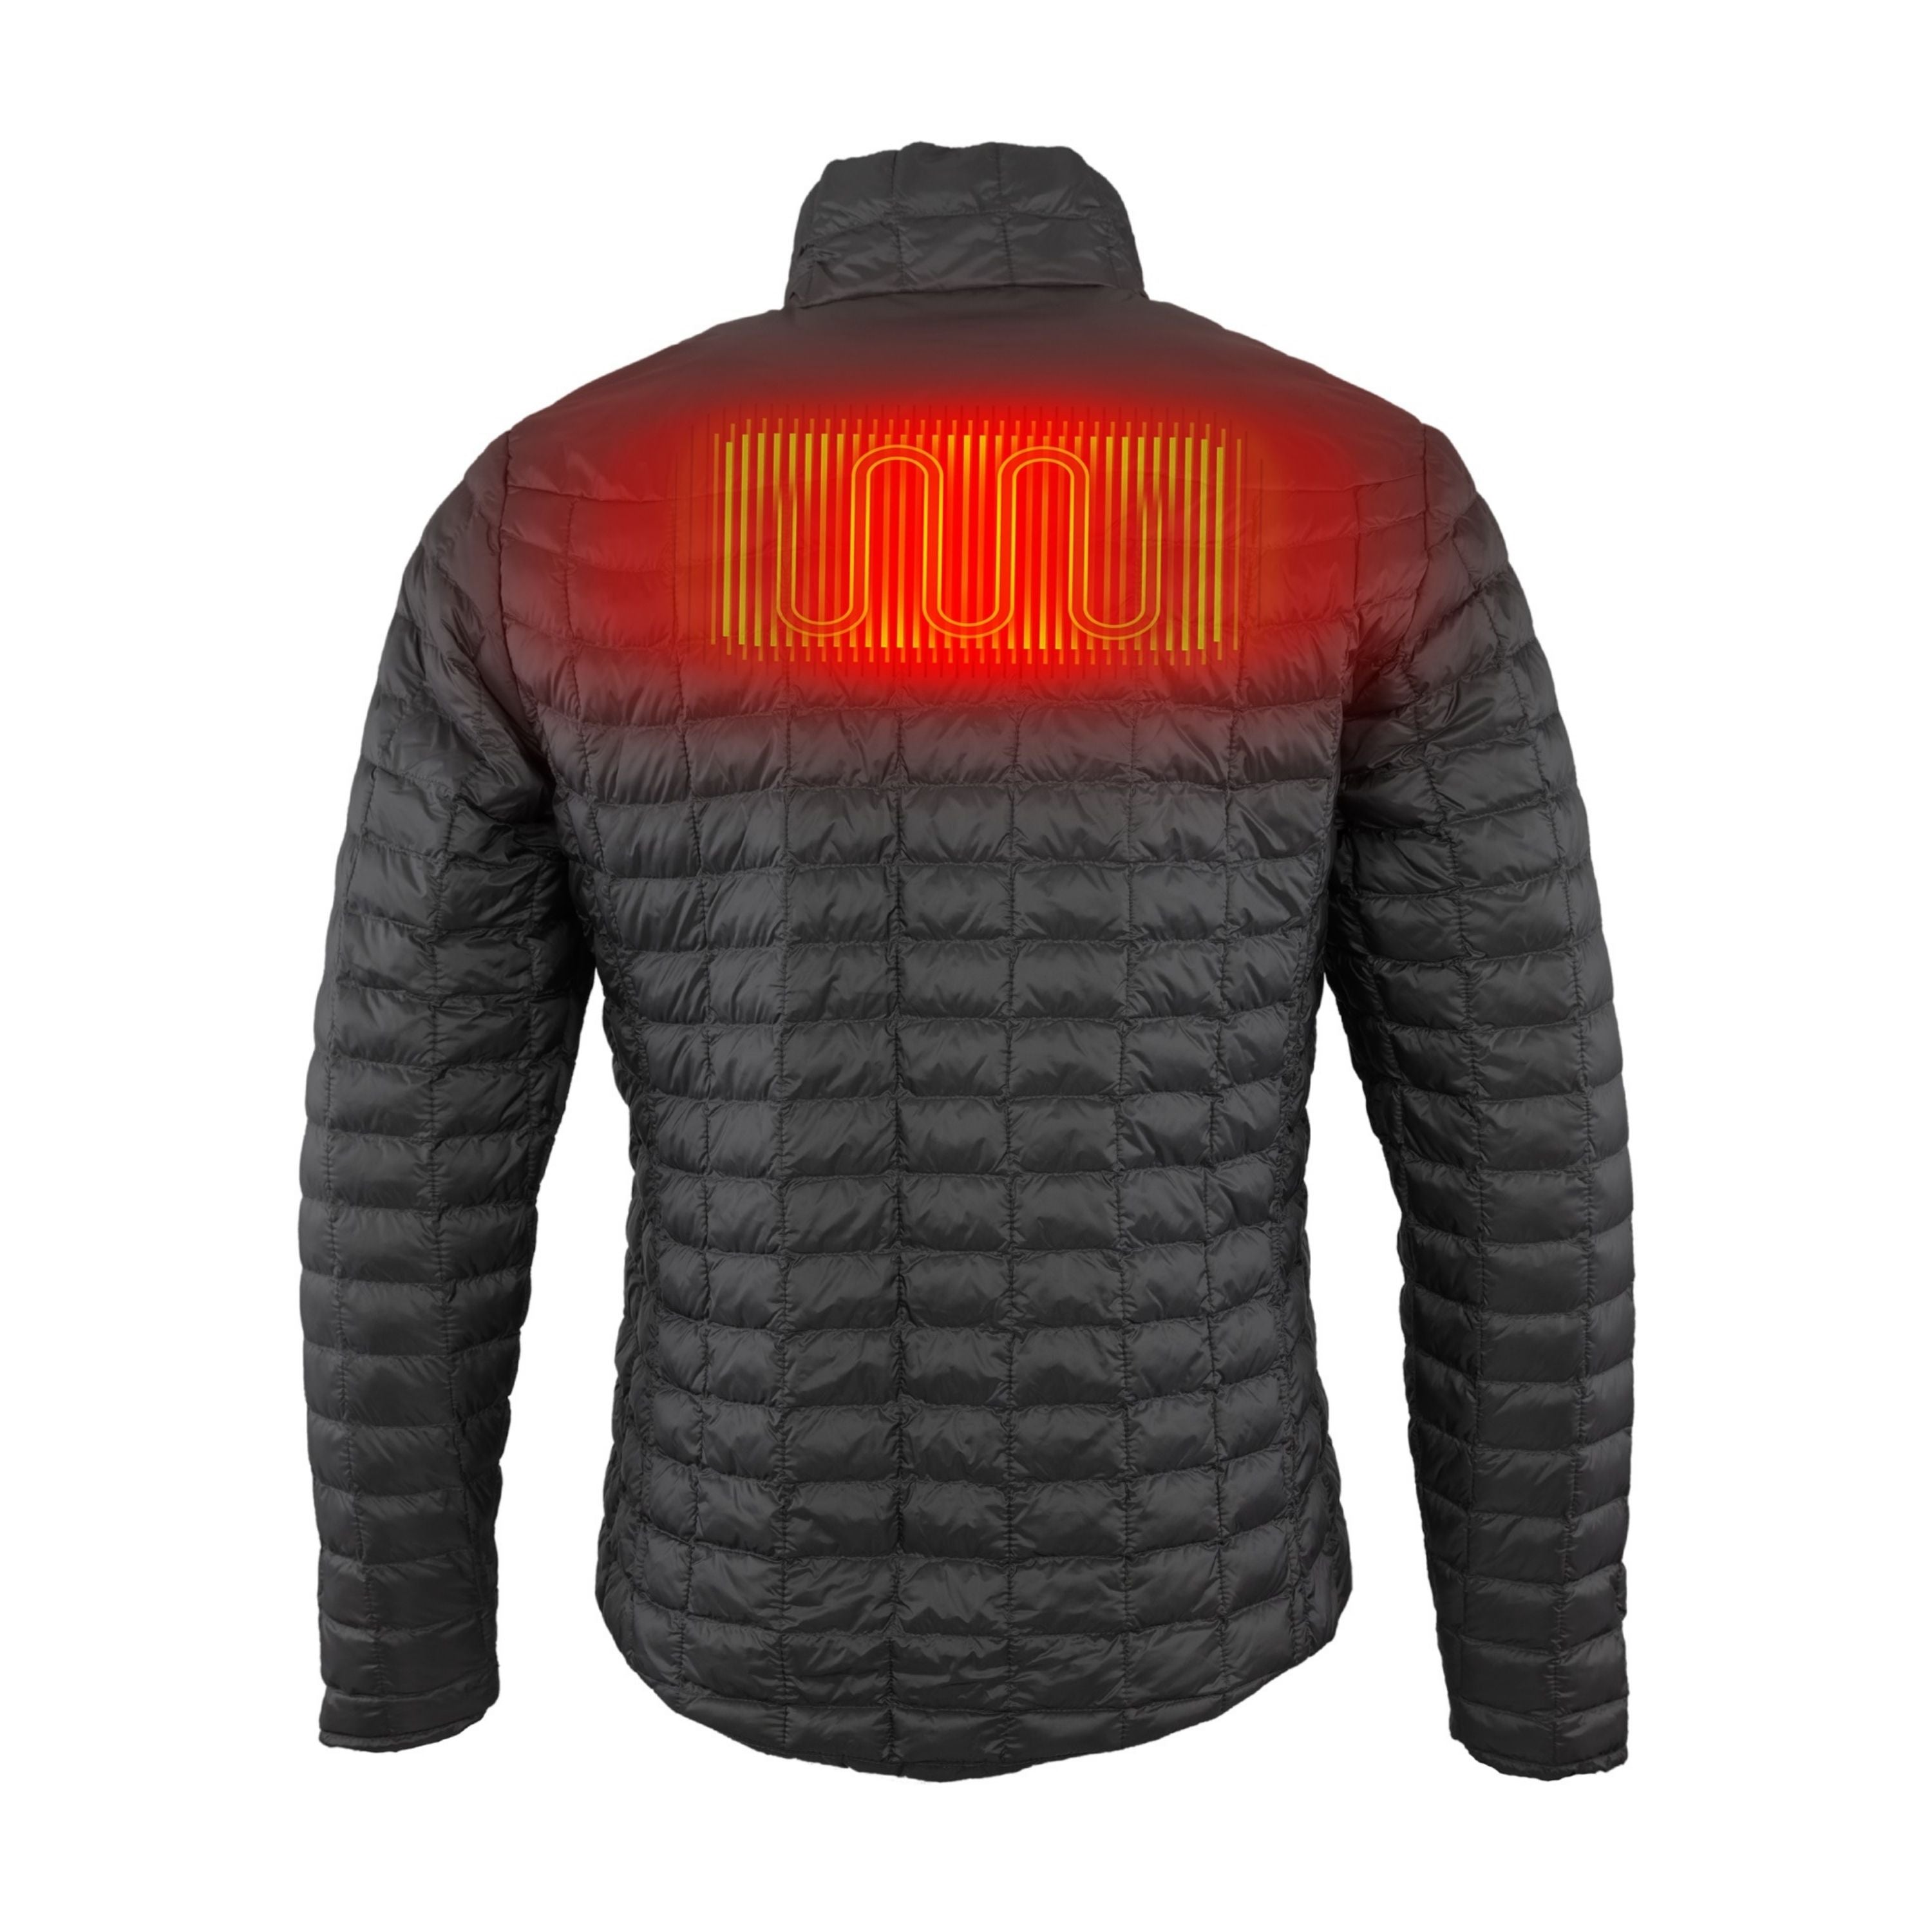 "Backcountry" heated jacket - Men’s